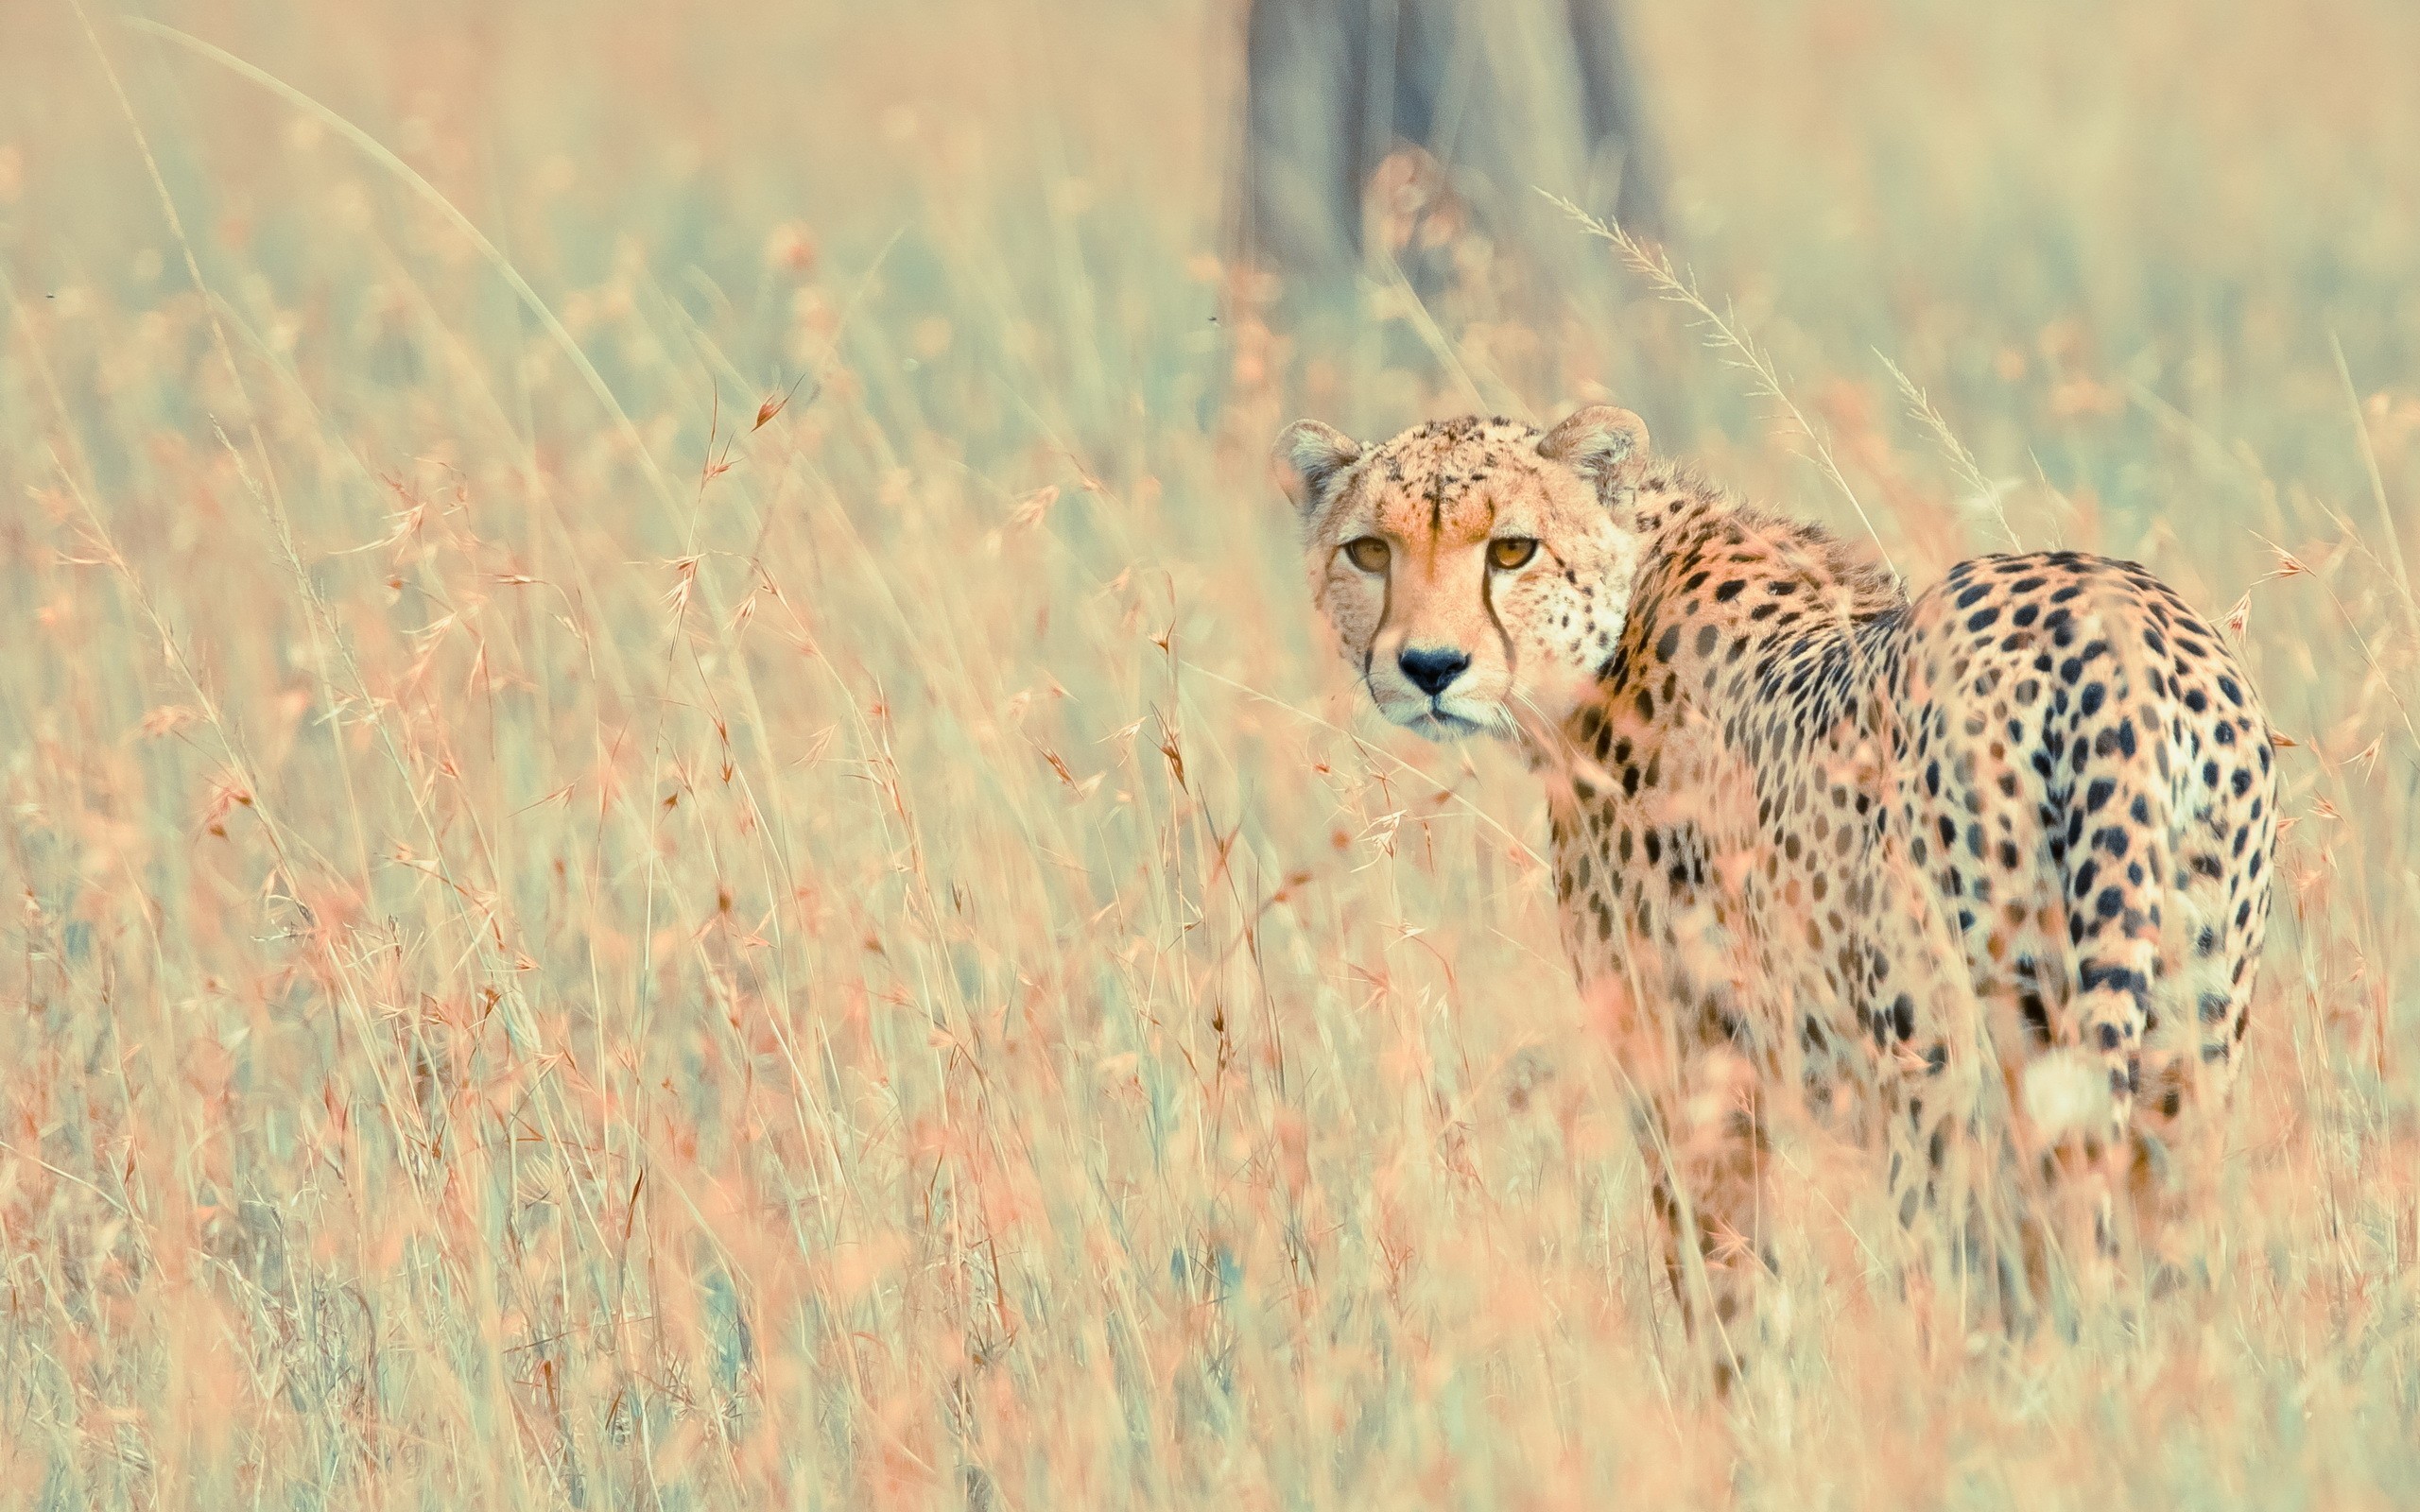 Wild Cheetah wallpapers | Wild Cheetah stock photos